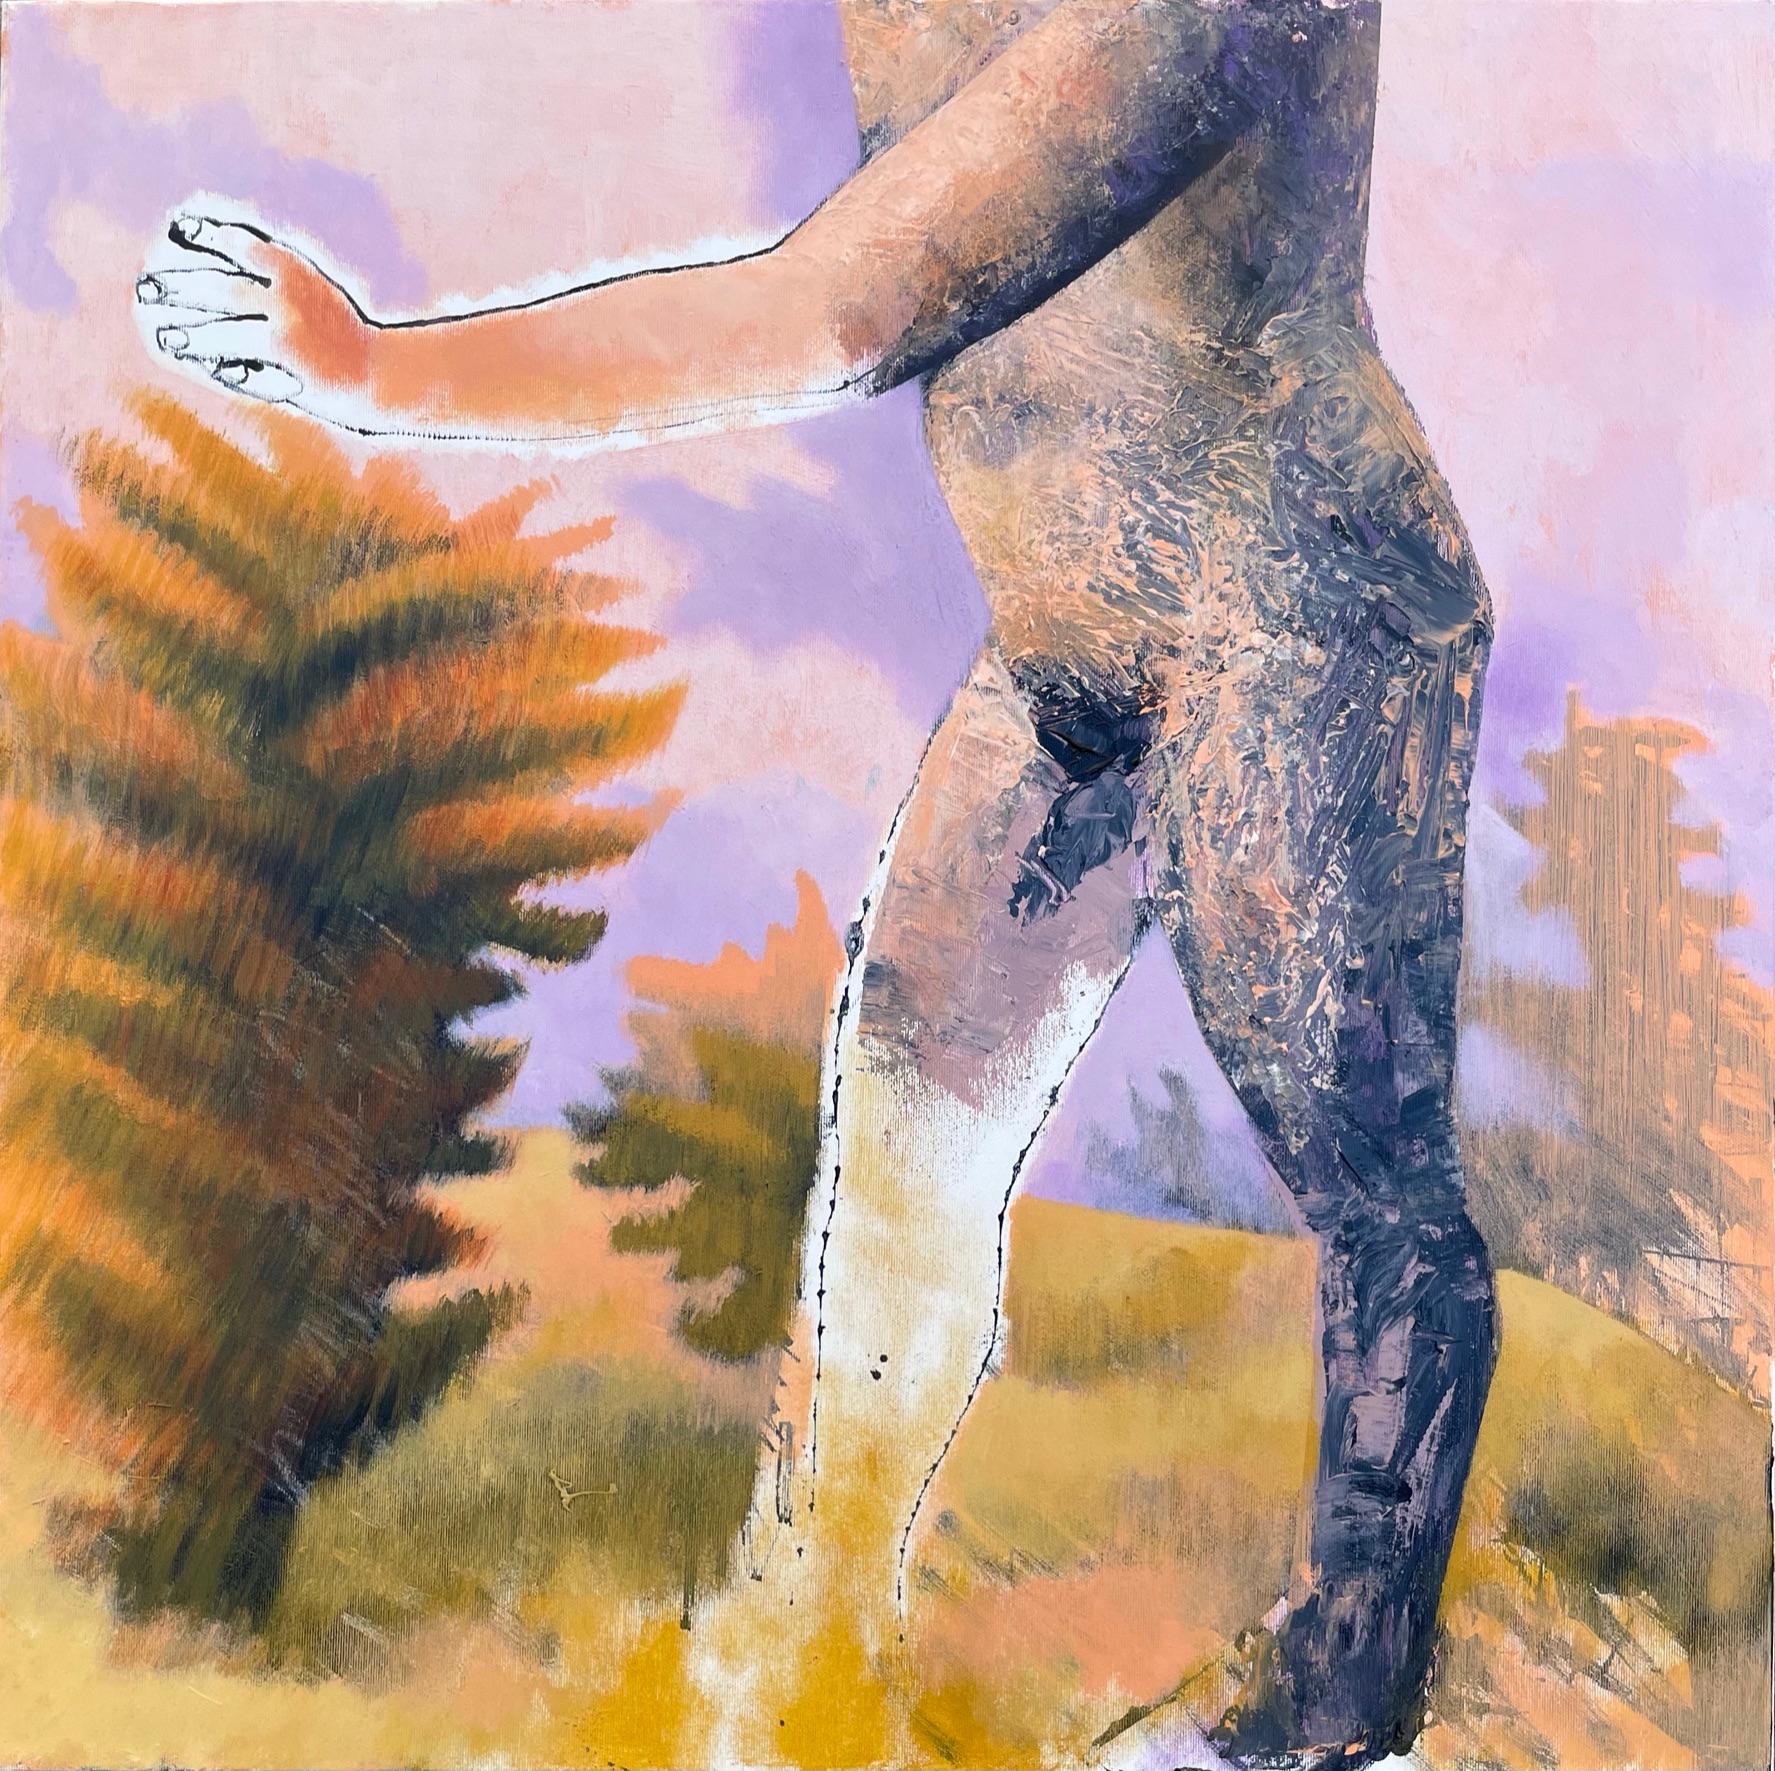 Alexandru Rădvan Figurative Painting - Figure Walking in a Dry Landscape - 21st Century, Male, Nude, Nature, Summer